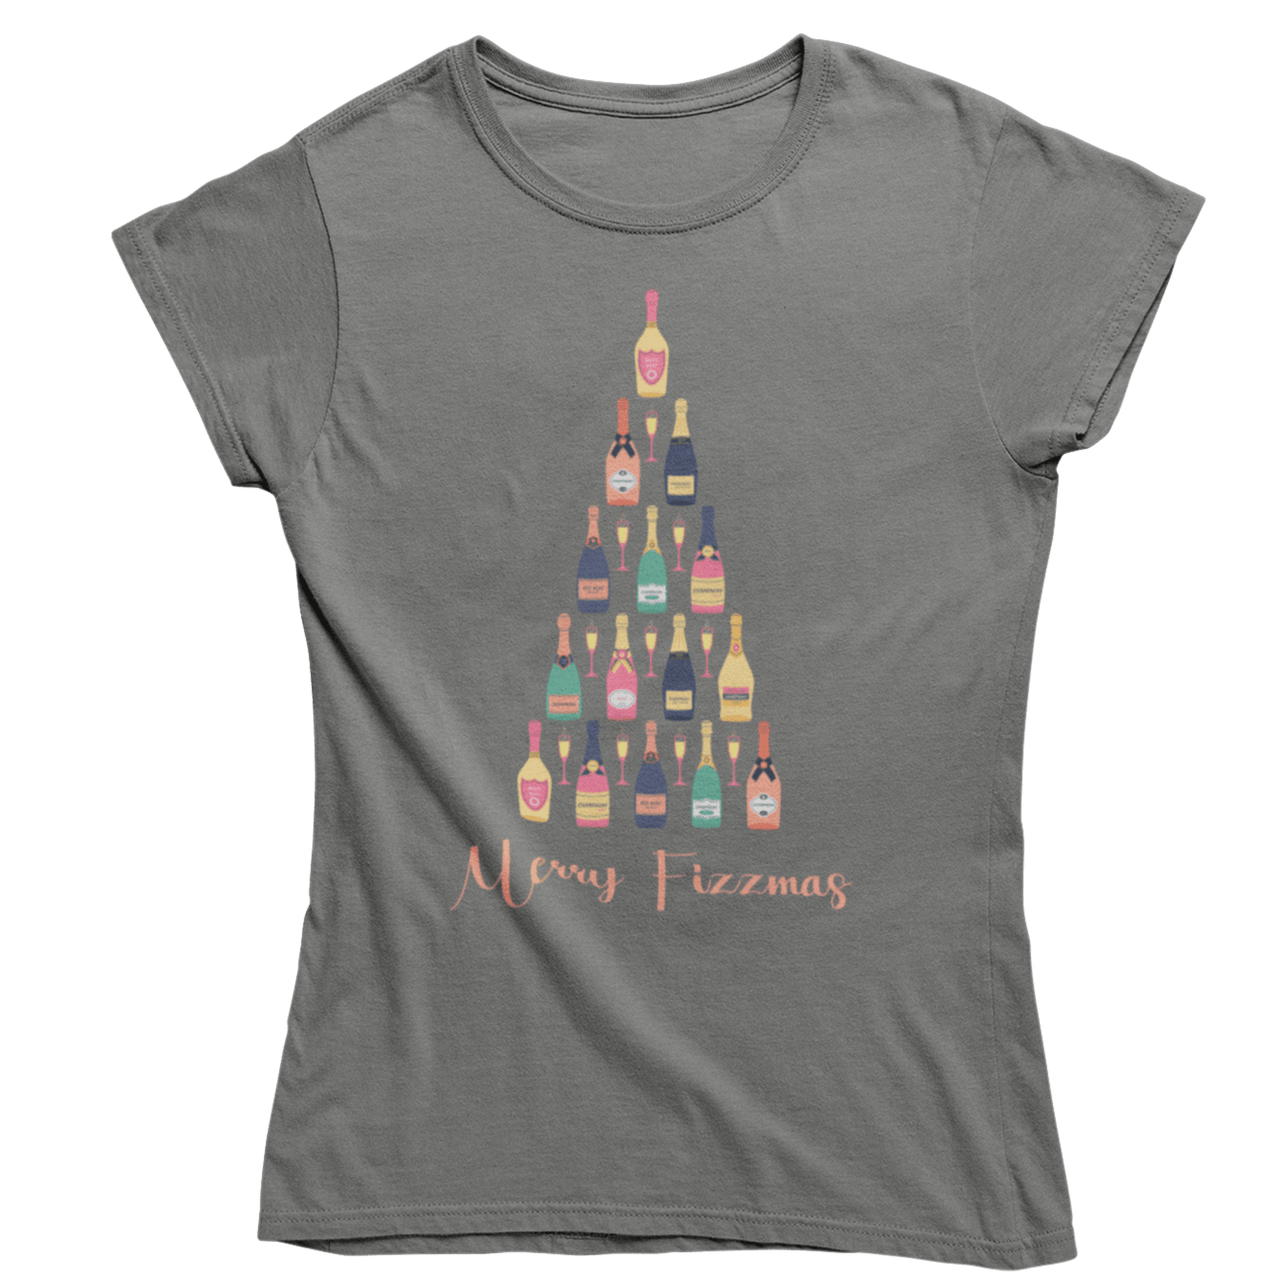 Christmas Fizzmas Tree Womens Fitted T-Shirt 8Ball